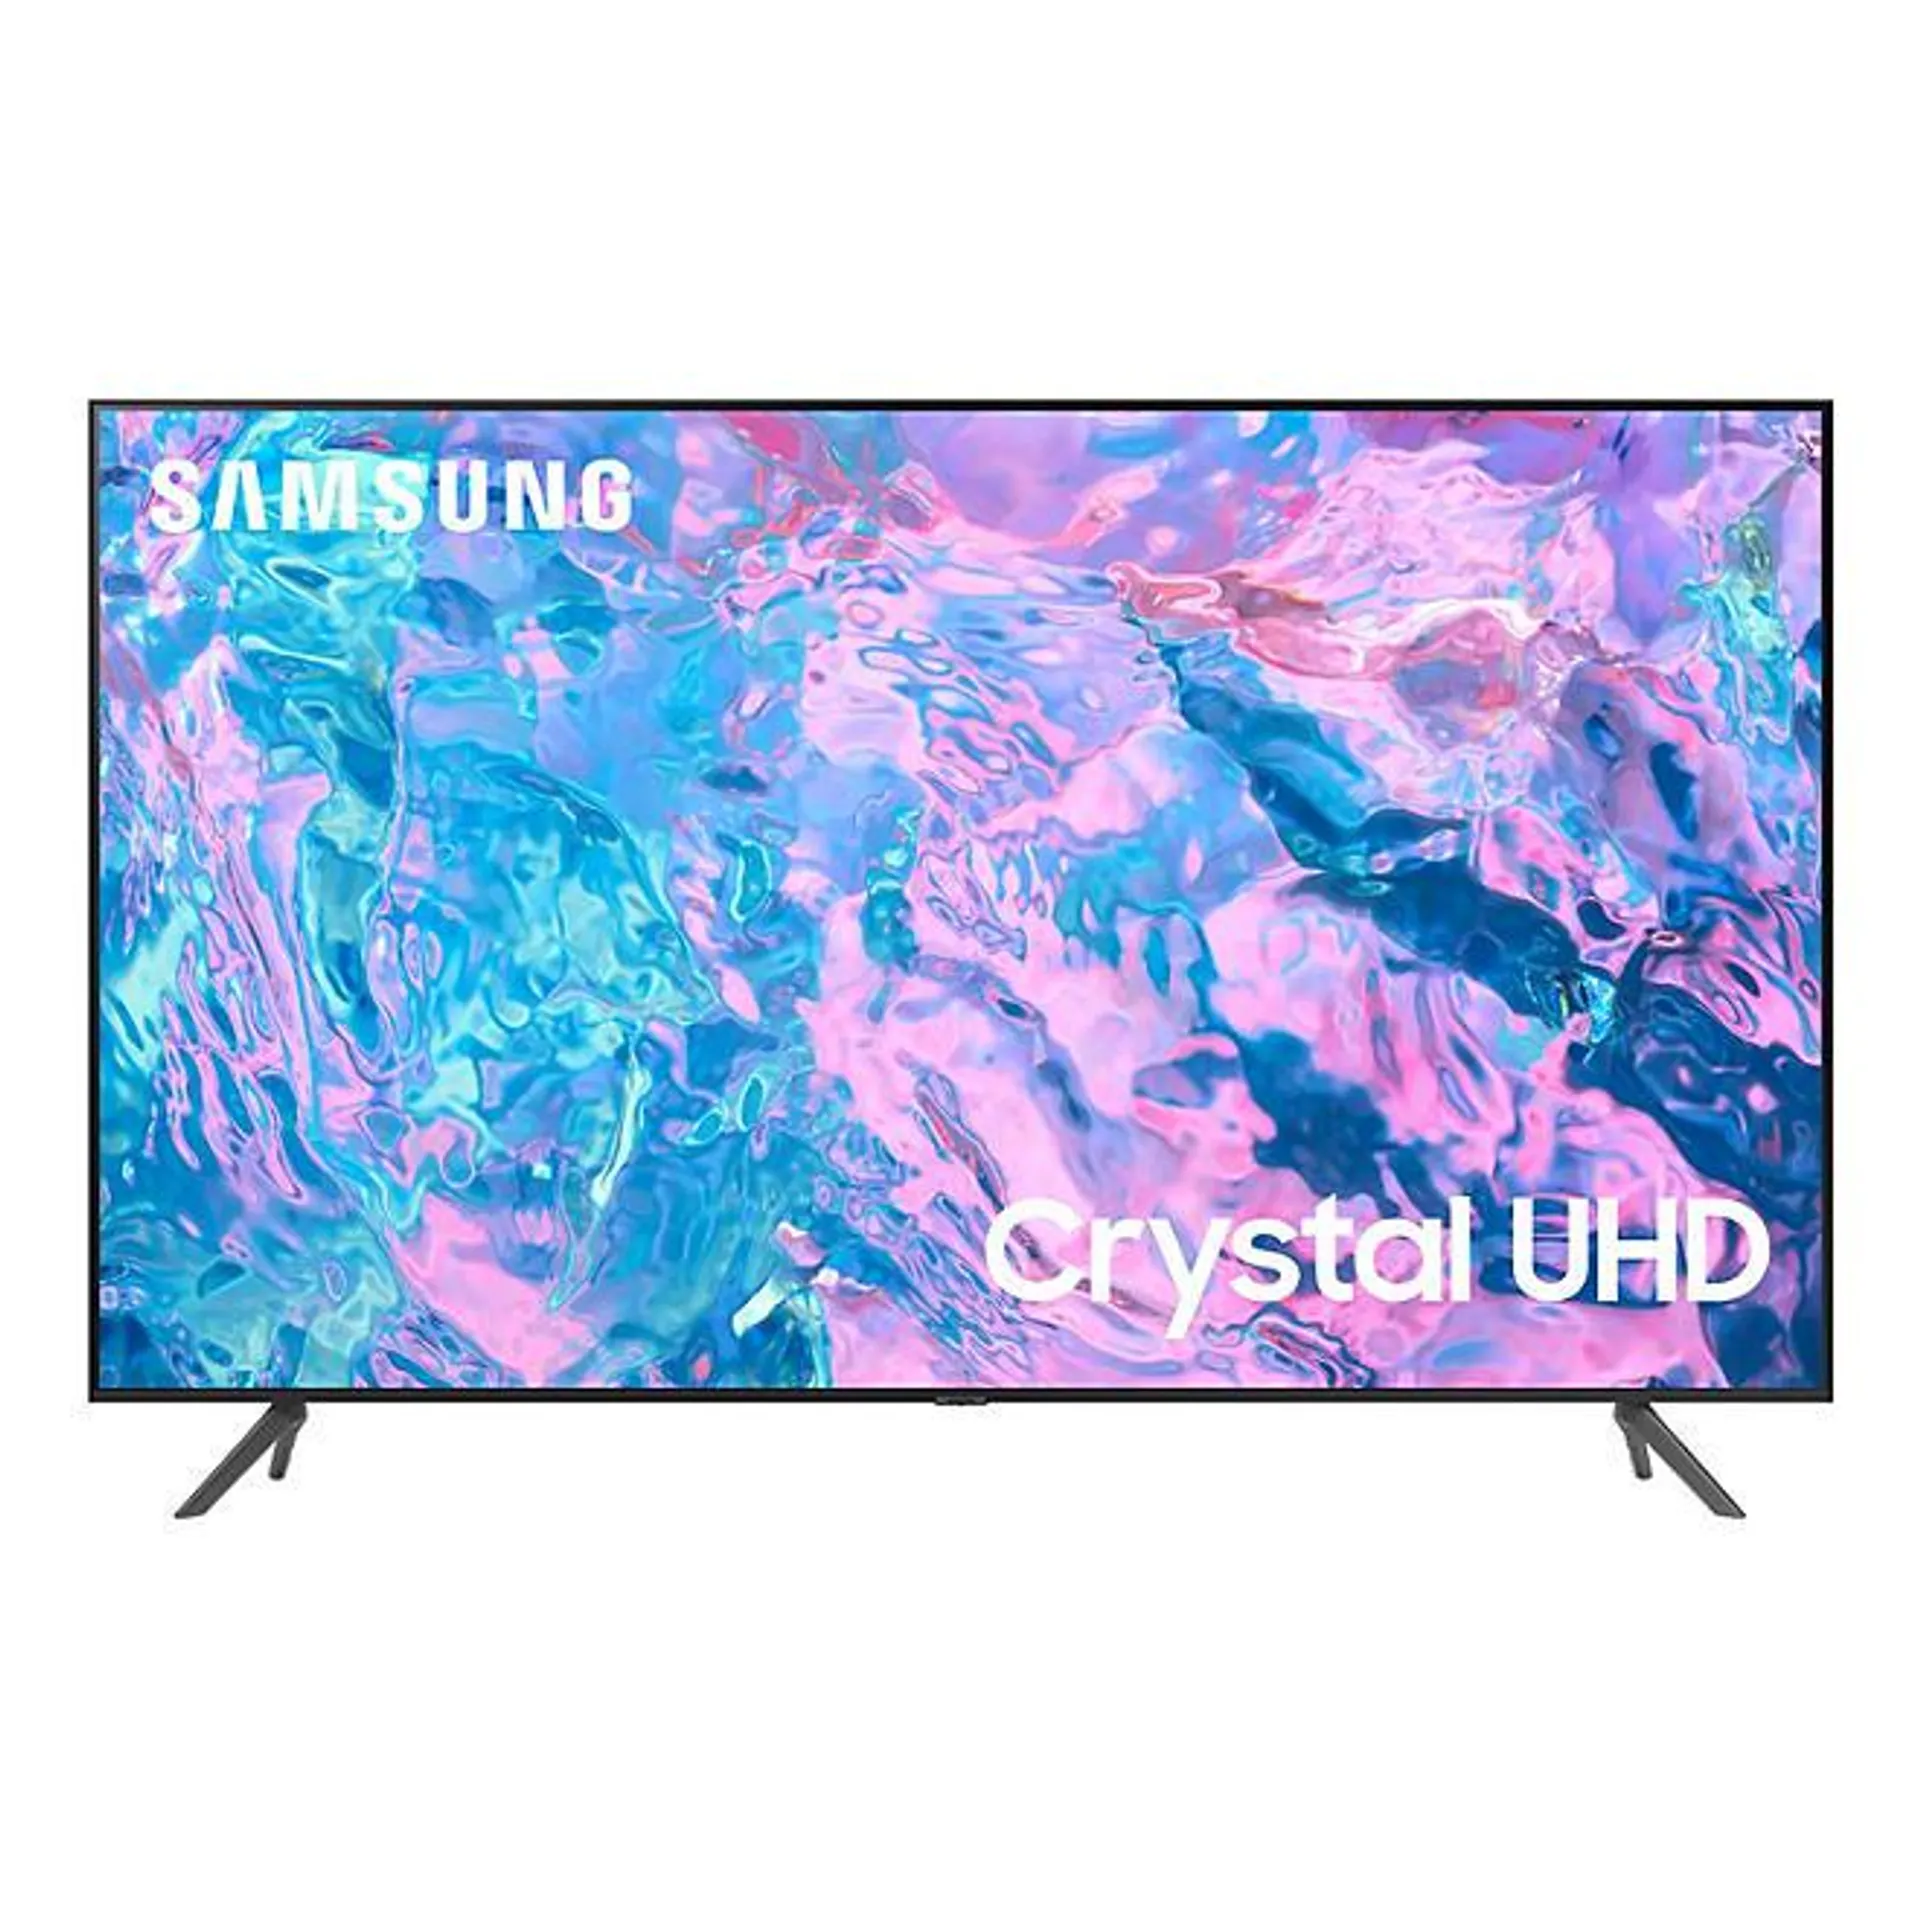 SAMSUNG 75" Class CU7000-Series Crystal UHD 4K Smart TV with HDR - UN75CU7000DXZA